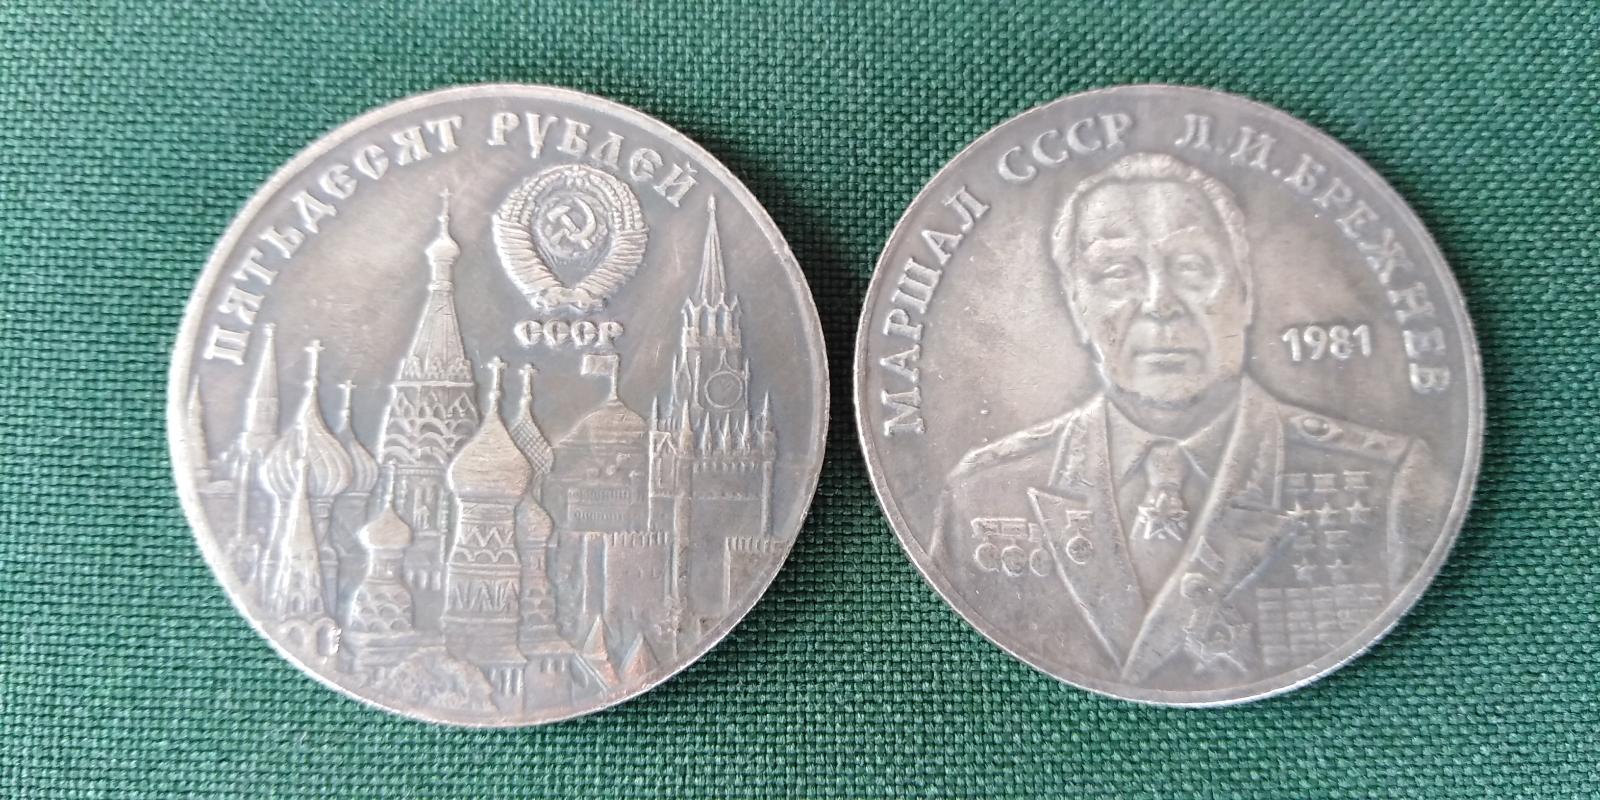 RUSKO CCCP 50 rubľov 1981 LEONID BREŽNEV kópia M-0427 - Európa numizmatika